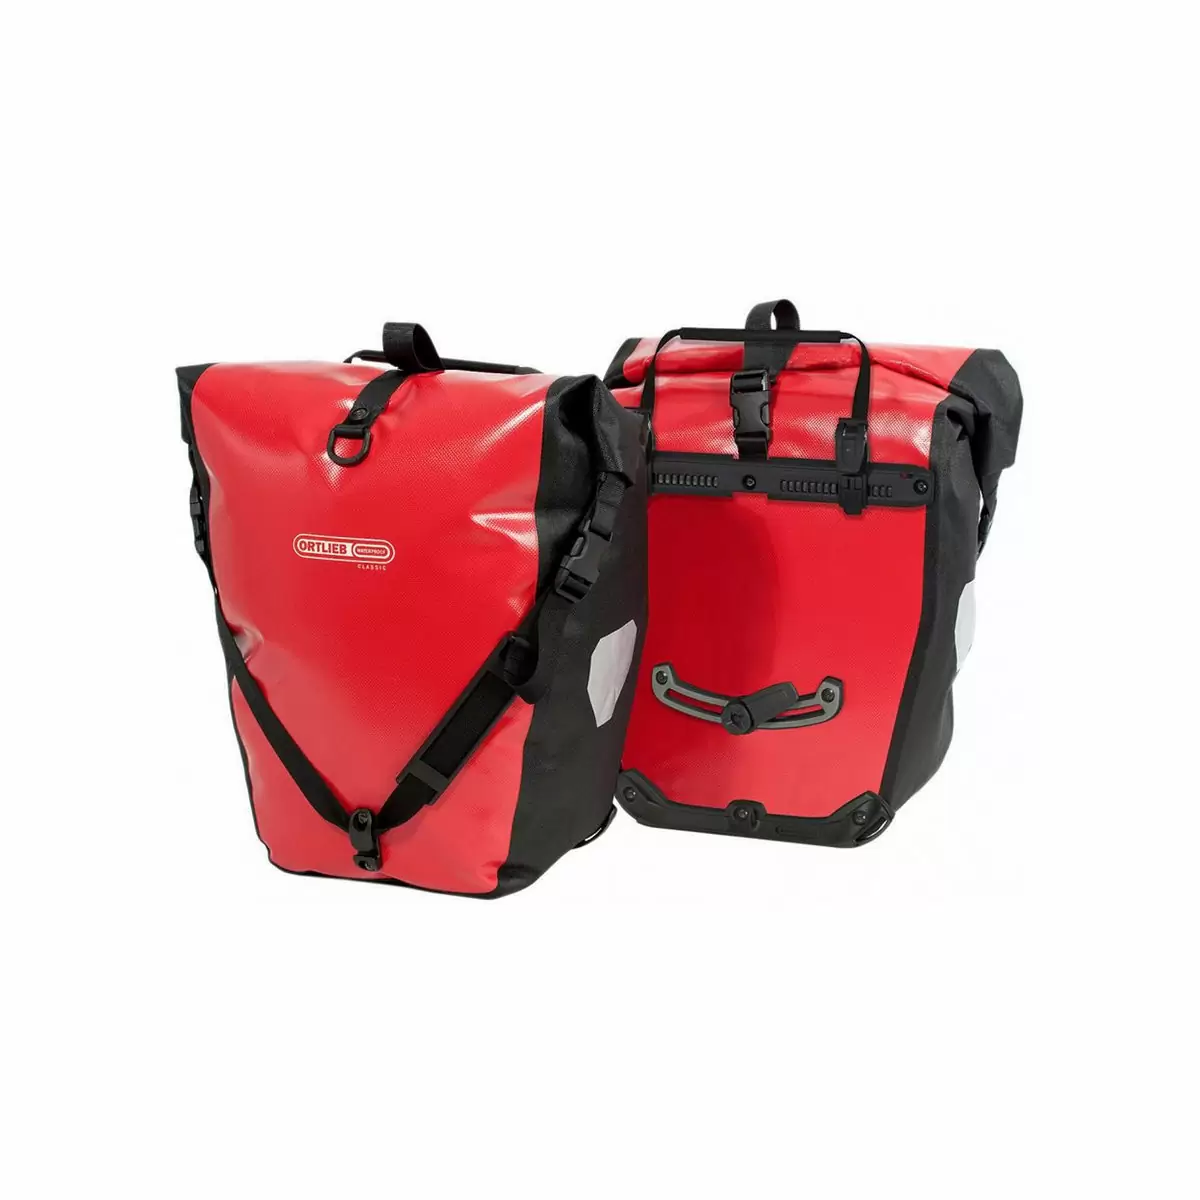 pannier bag set back-roller classic f5302 ql2.1 red 40l - image